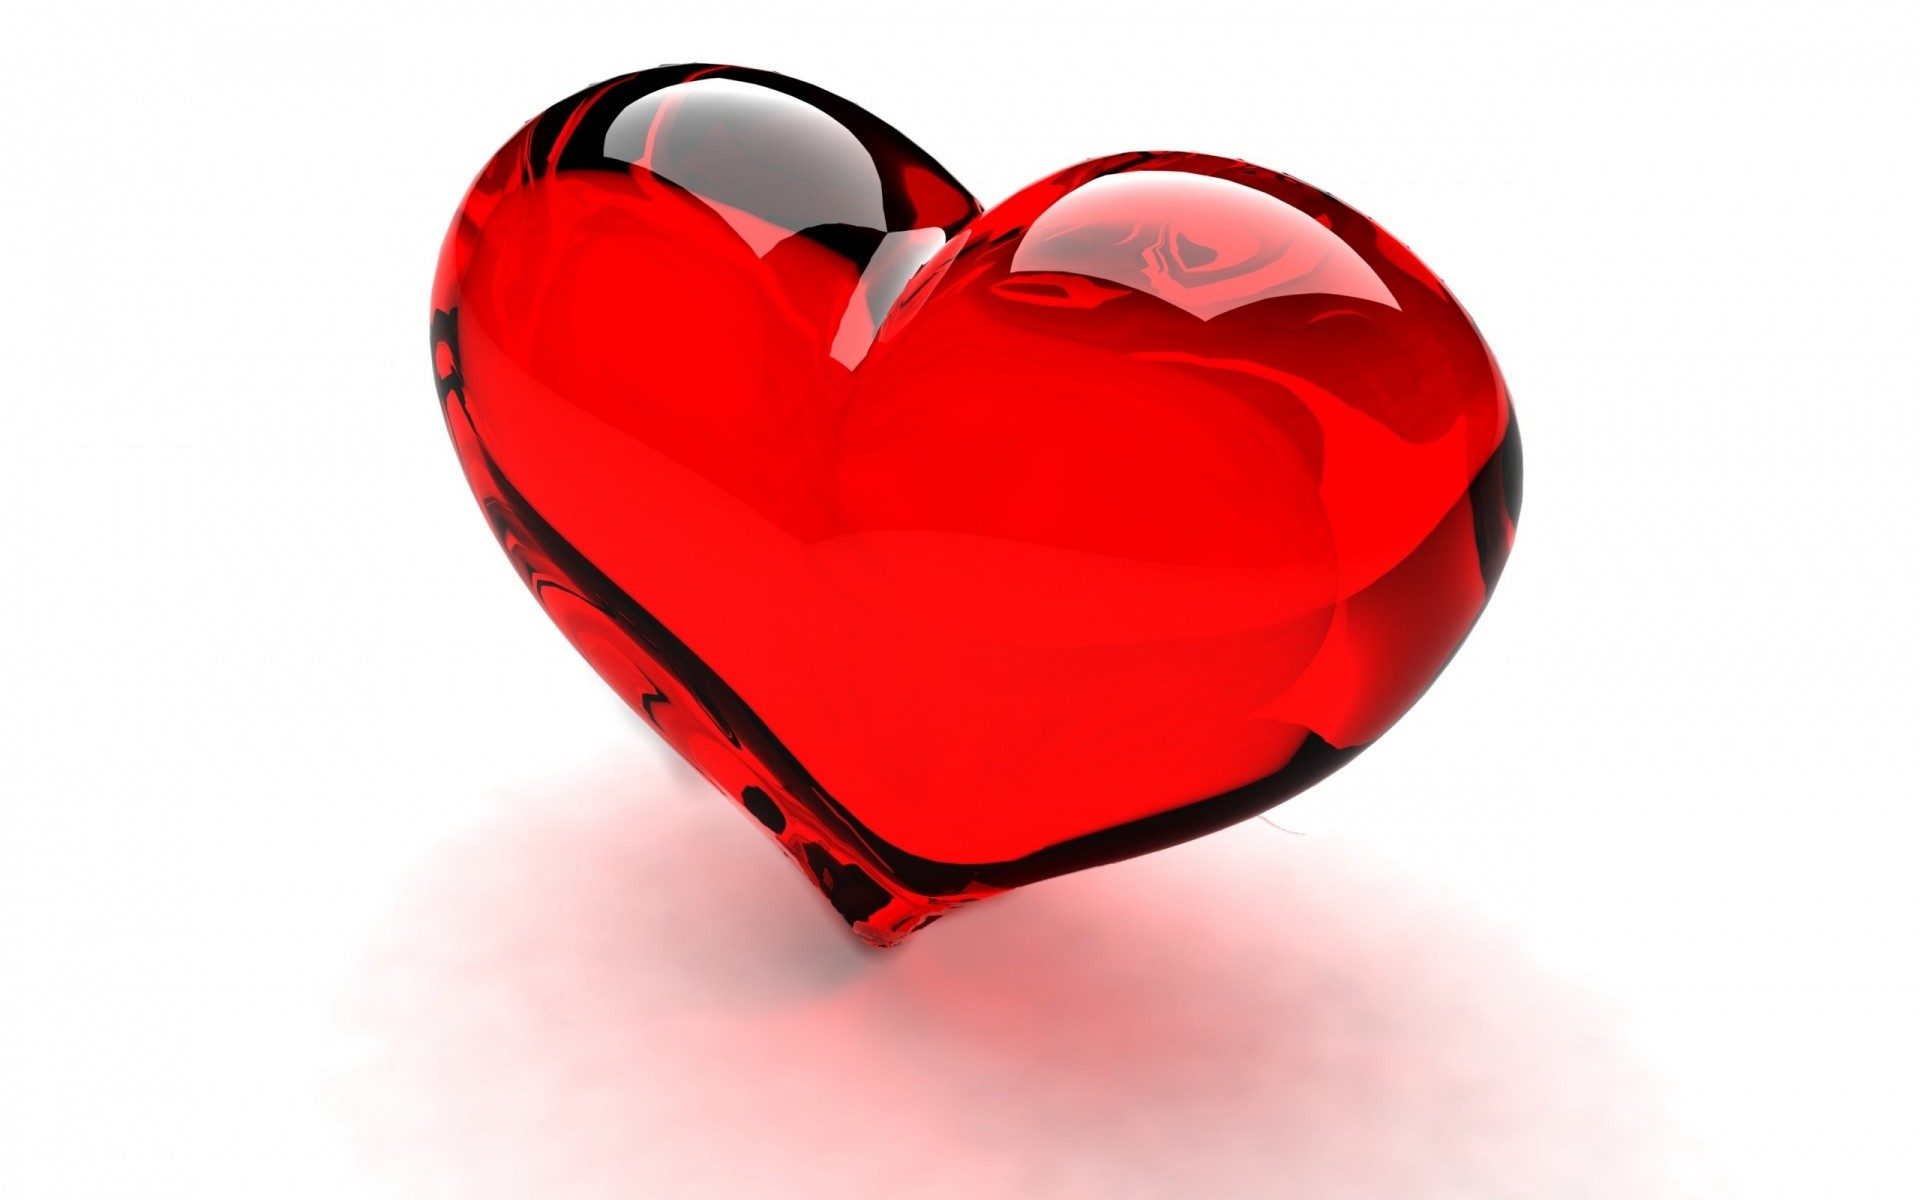 Red Heart Wallpaper Images  Free Download on Freepik